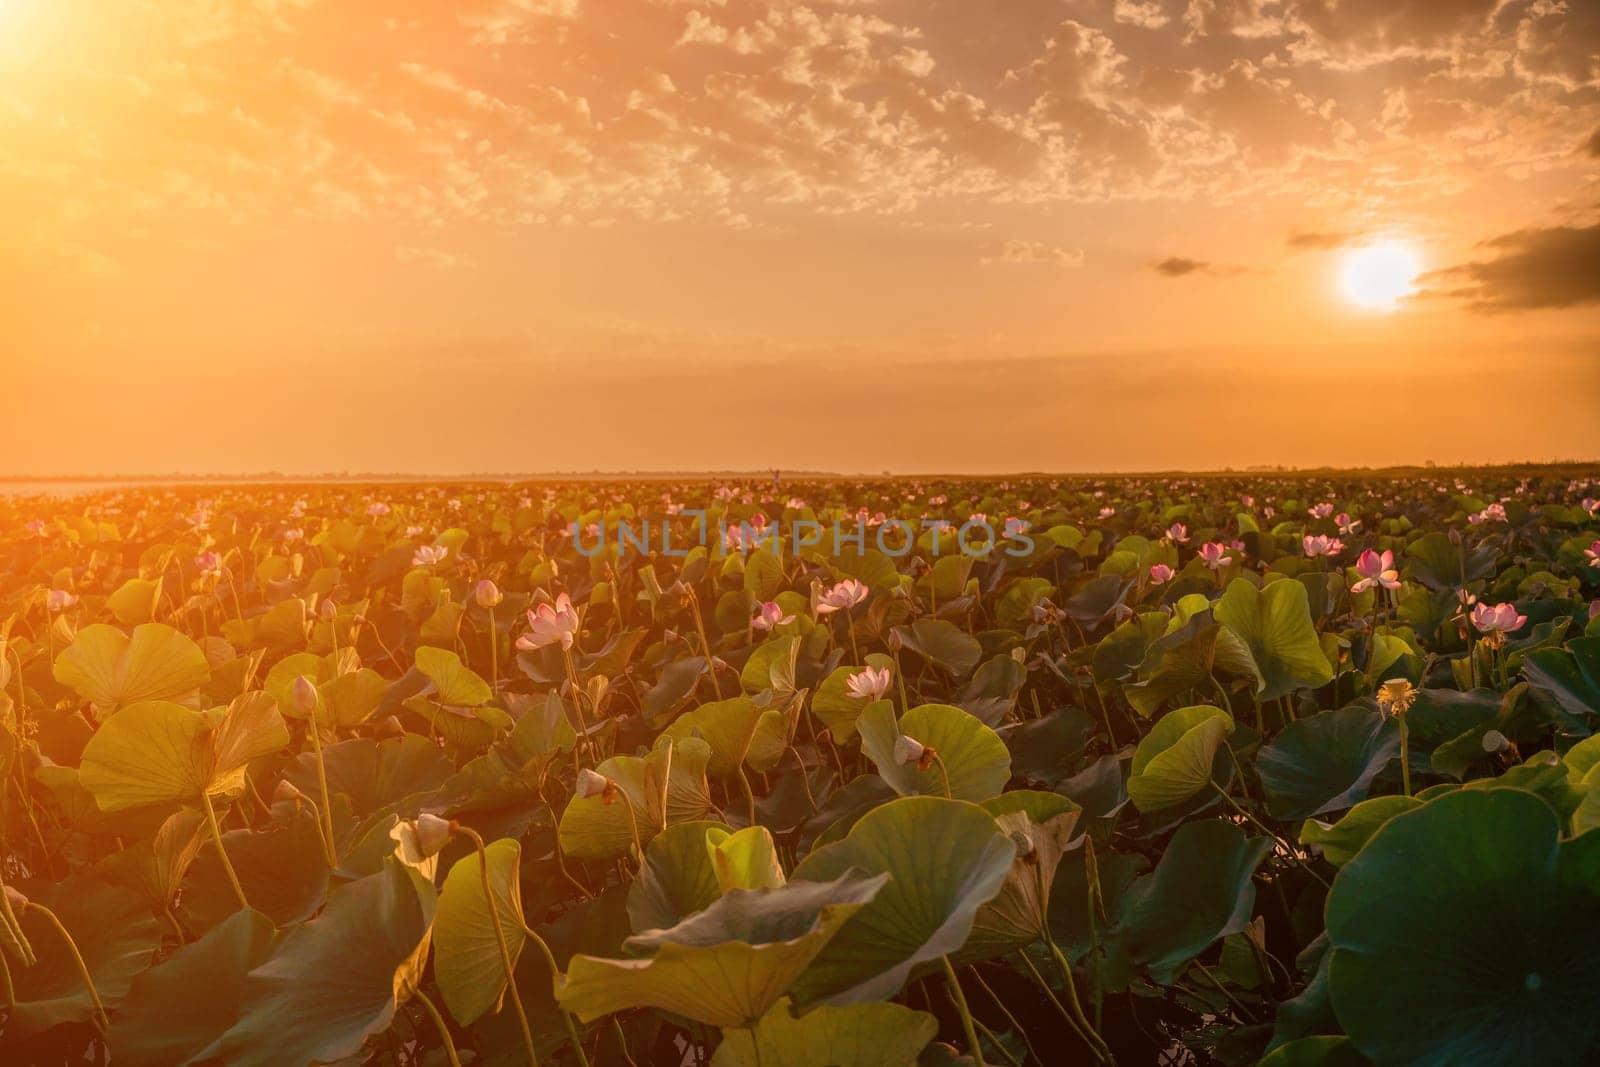 Sunrise in the field of lotuses, Pink lotus Nelumbo nucifera swa by Matiunina